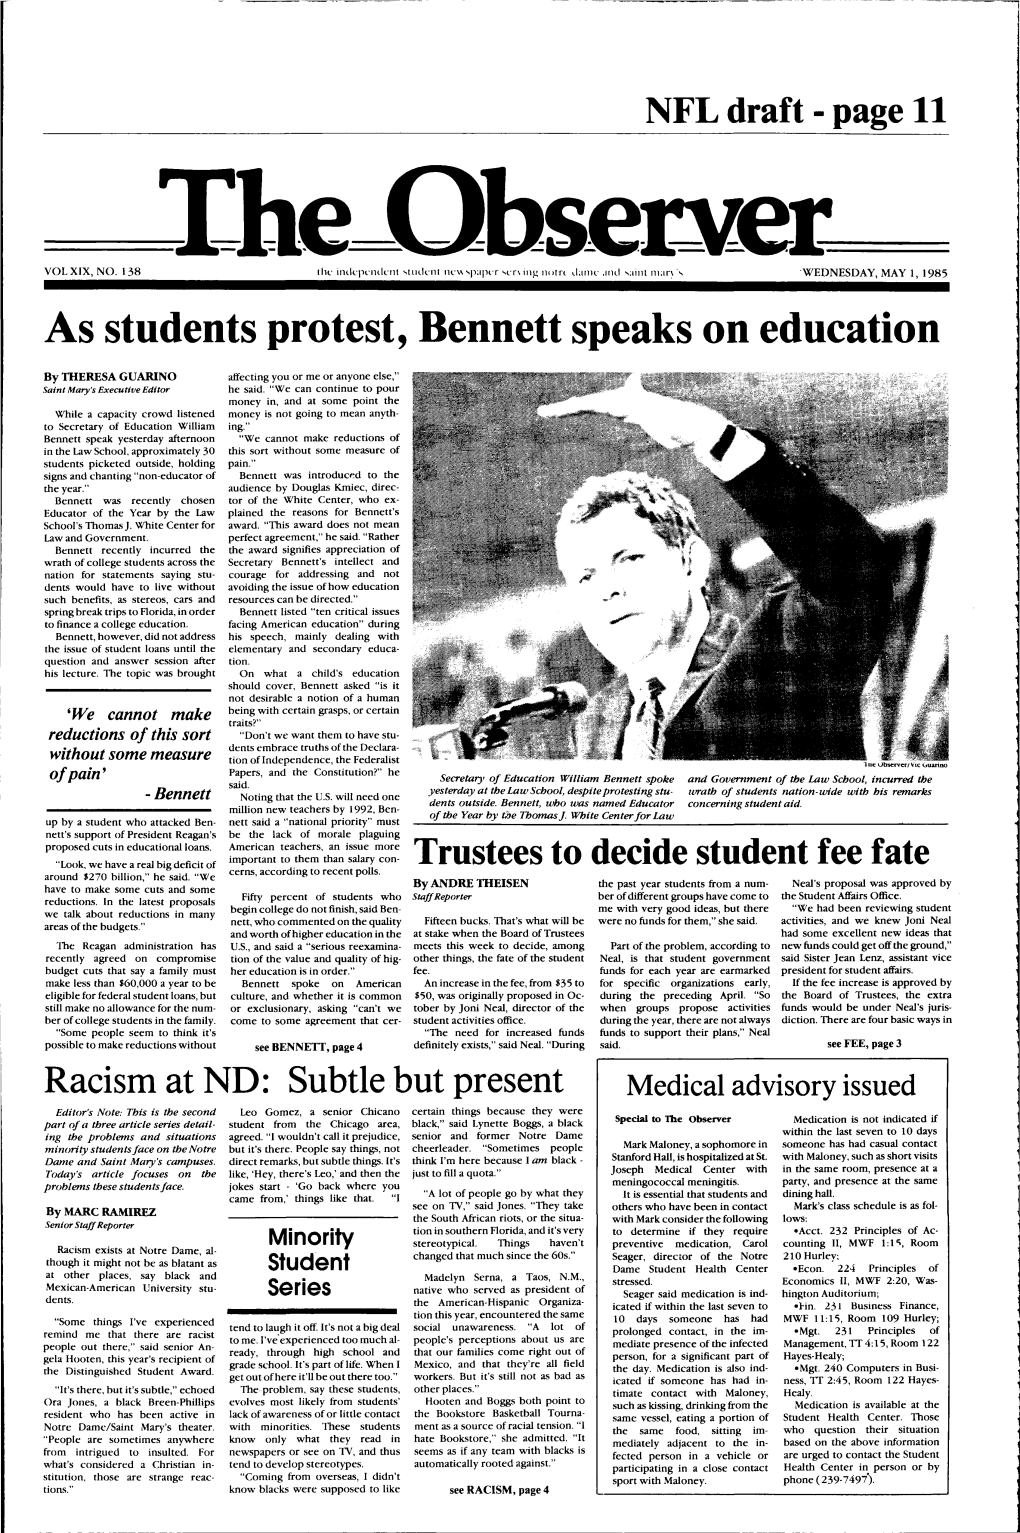 As Students Protest, Bennett Speaks on Education